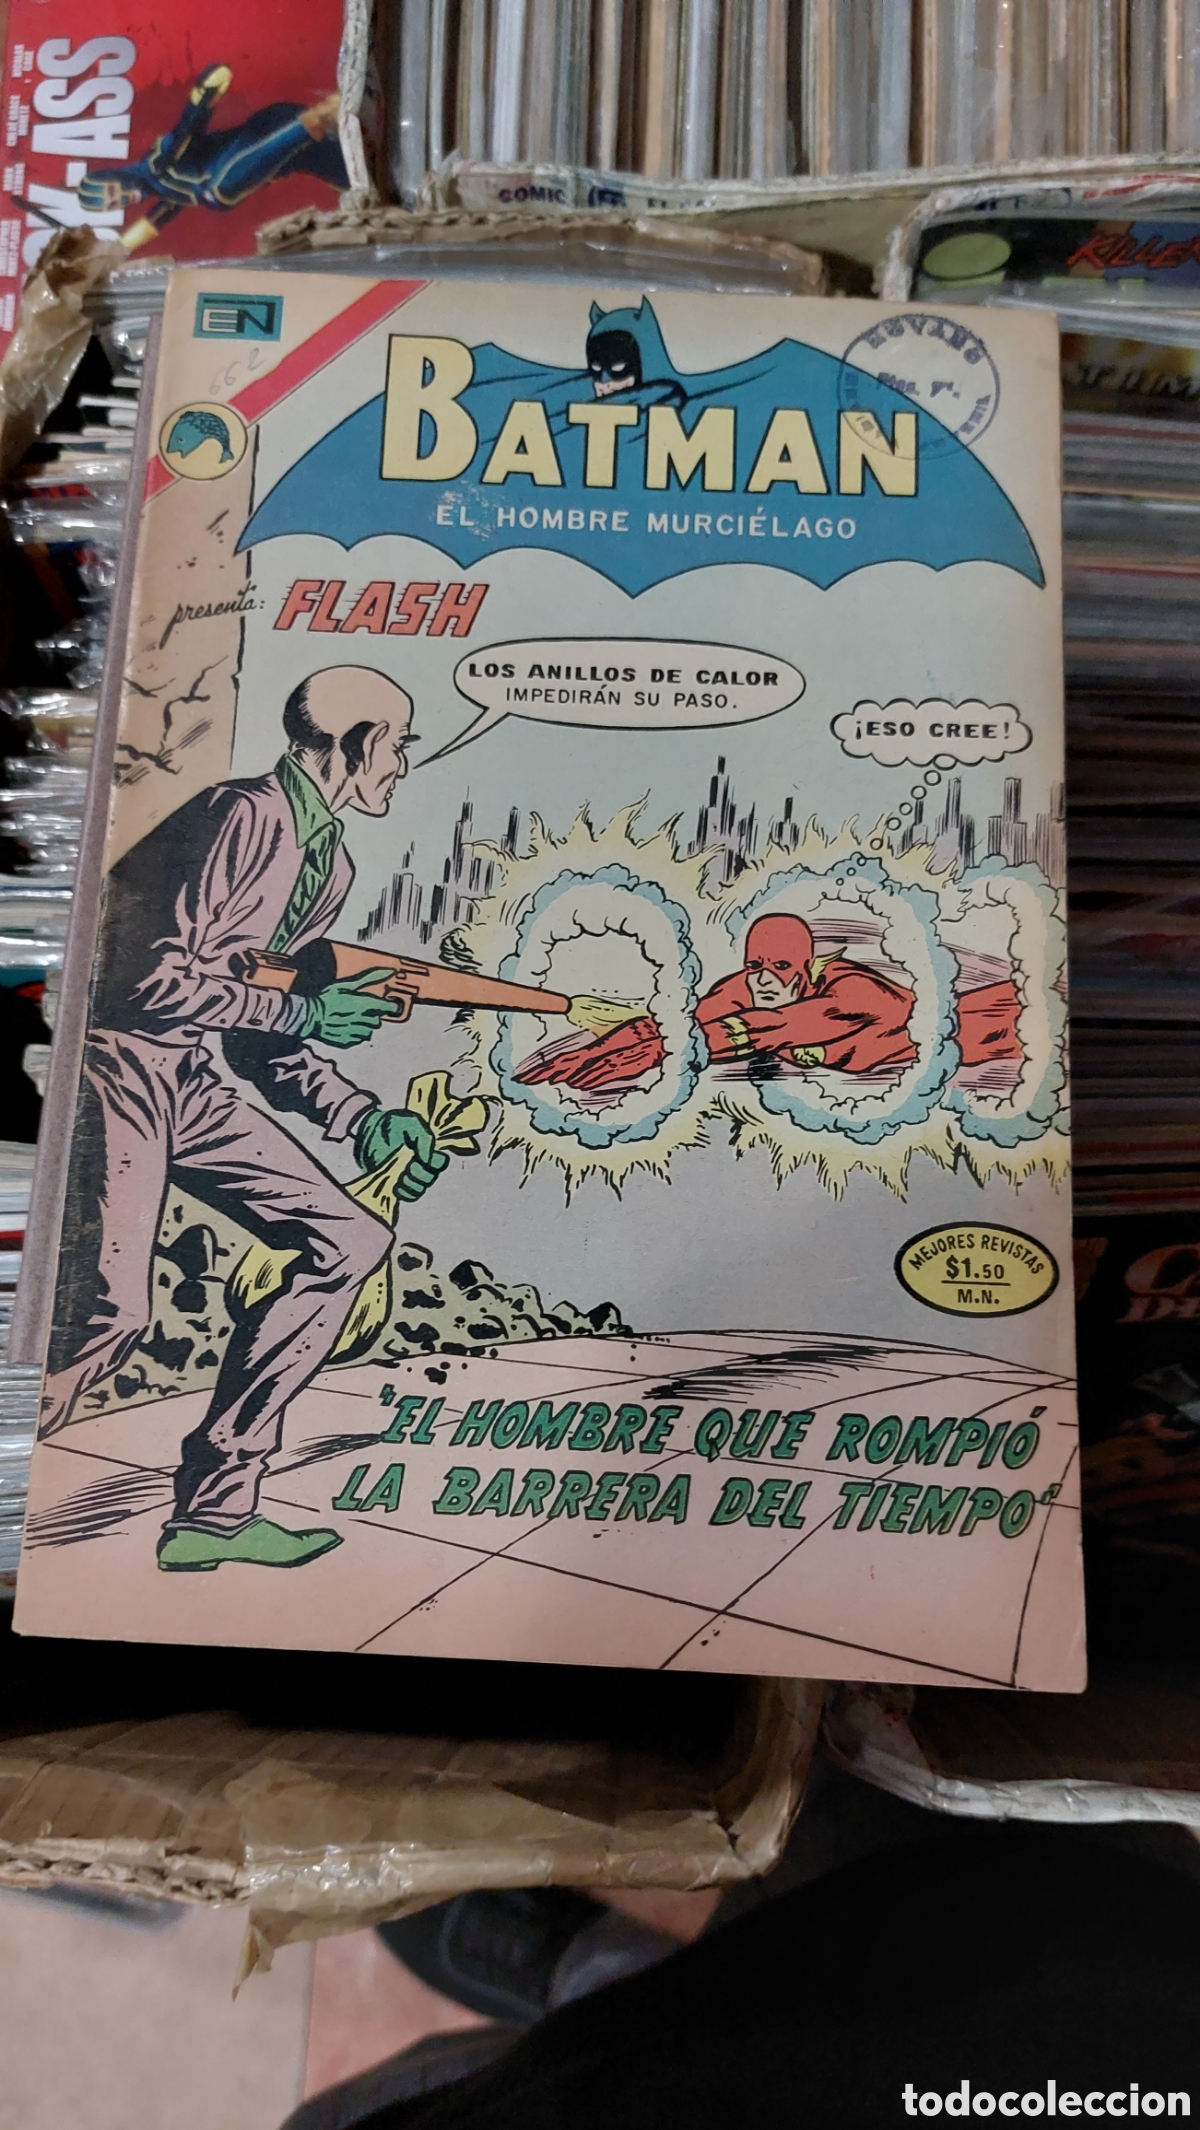 batman novaro #662 - Buy Tebeos Batman, publisher Novaro on todocoleccion